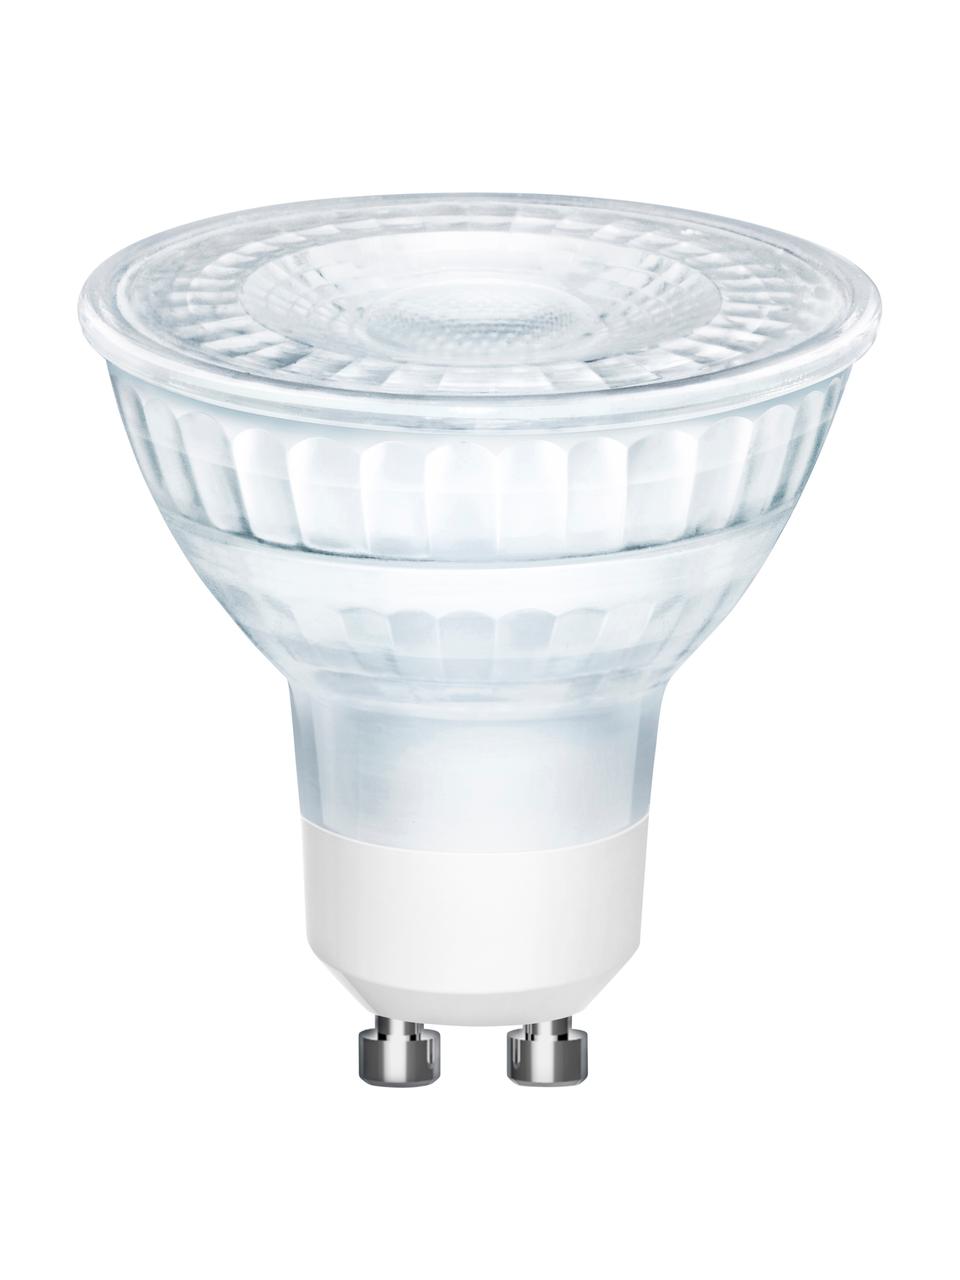 Lampadina GU10, 345lm, dimmerabile, bianco caldo, 3 pz, Lampadina: vetro, Base lampadina: alluminio, Trasparente, Ø 5 x Alt. 6 cm